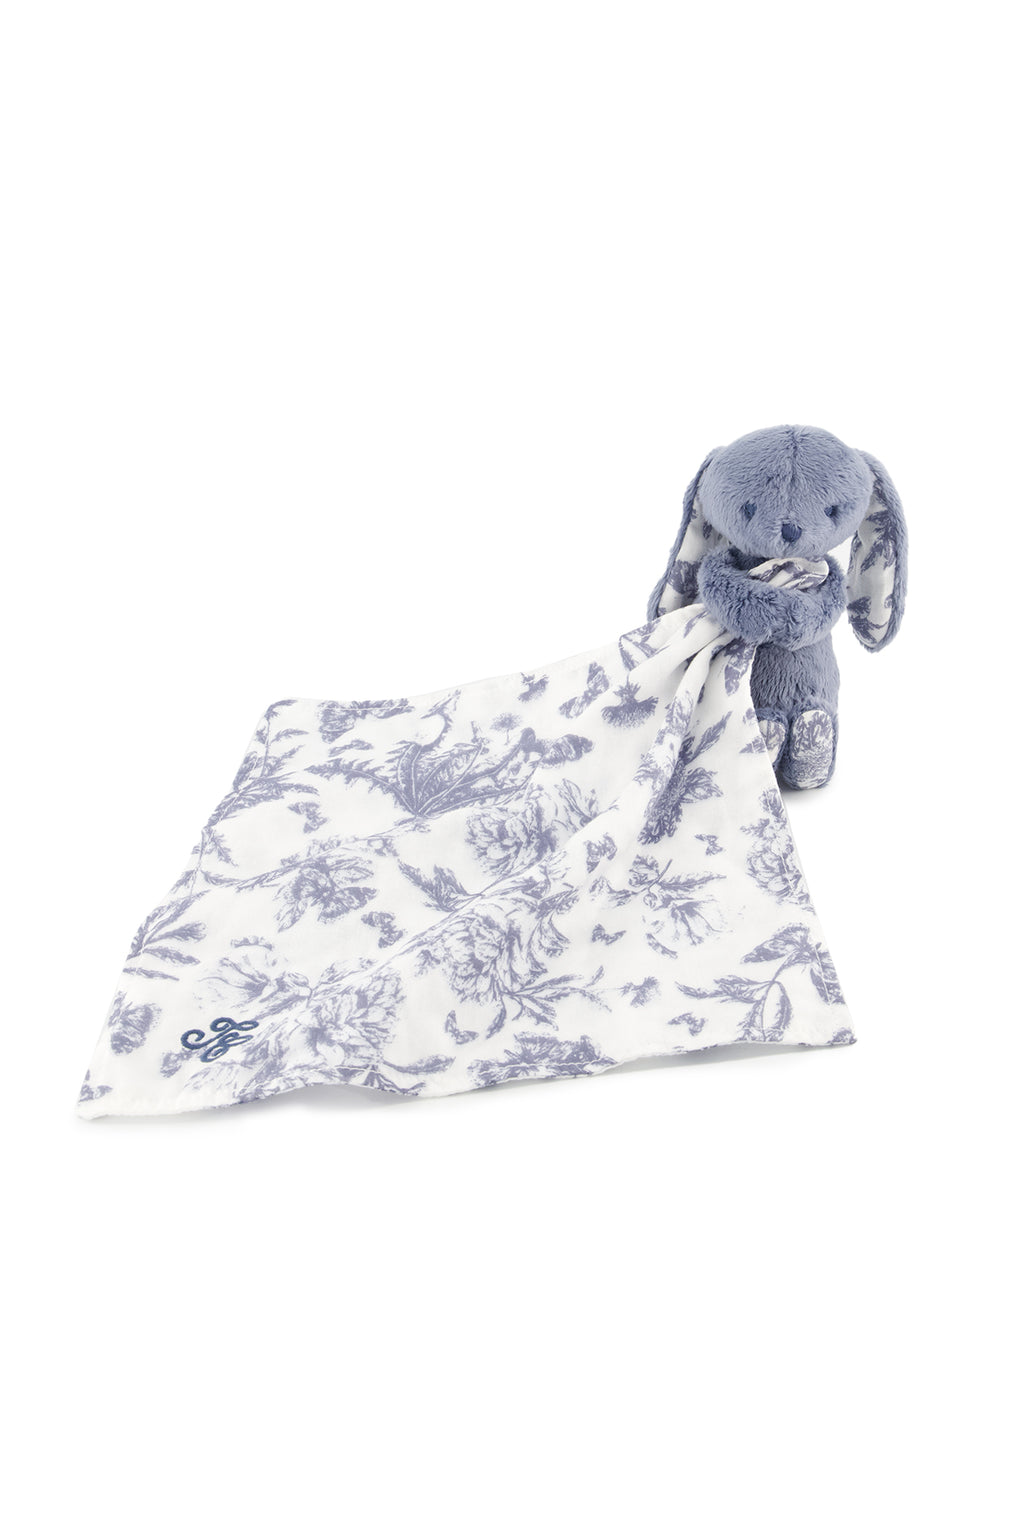 Augustin the rabbit - Comforter Print inspiration Toile de Jouy Blue